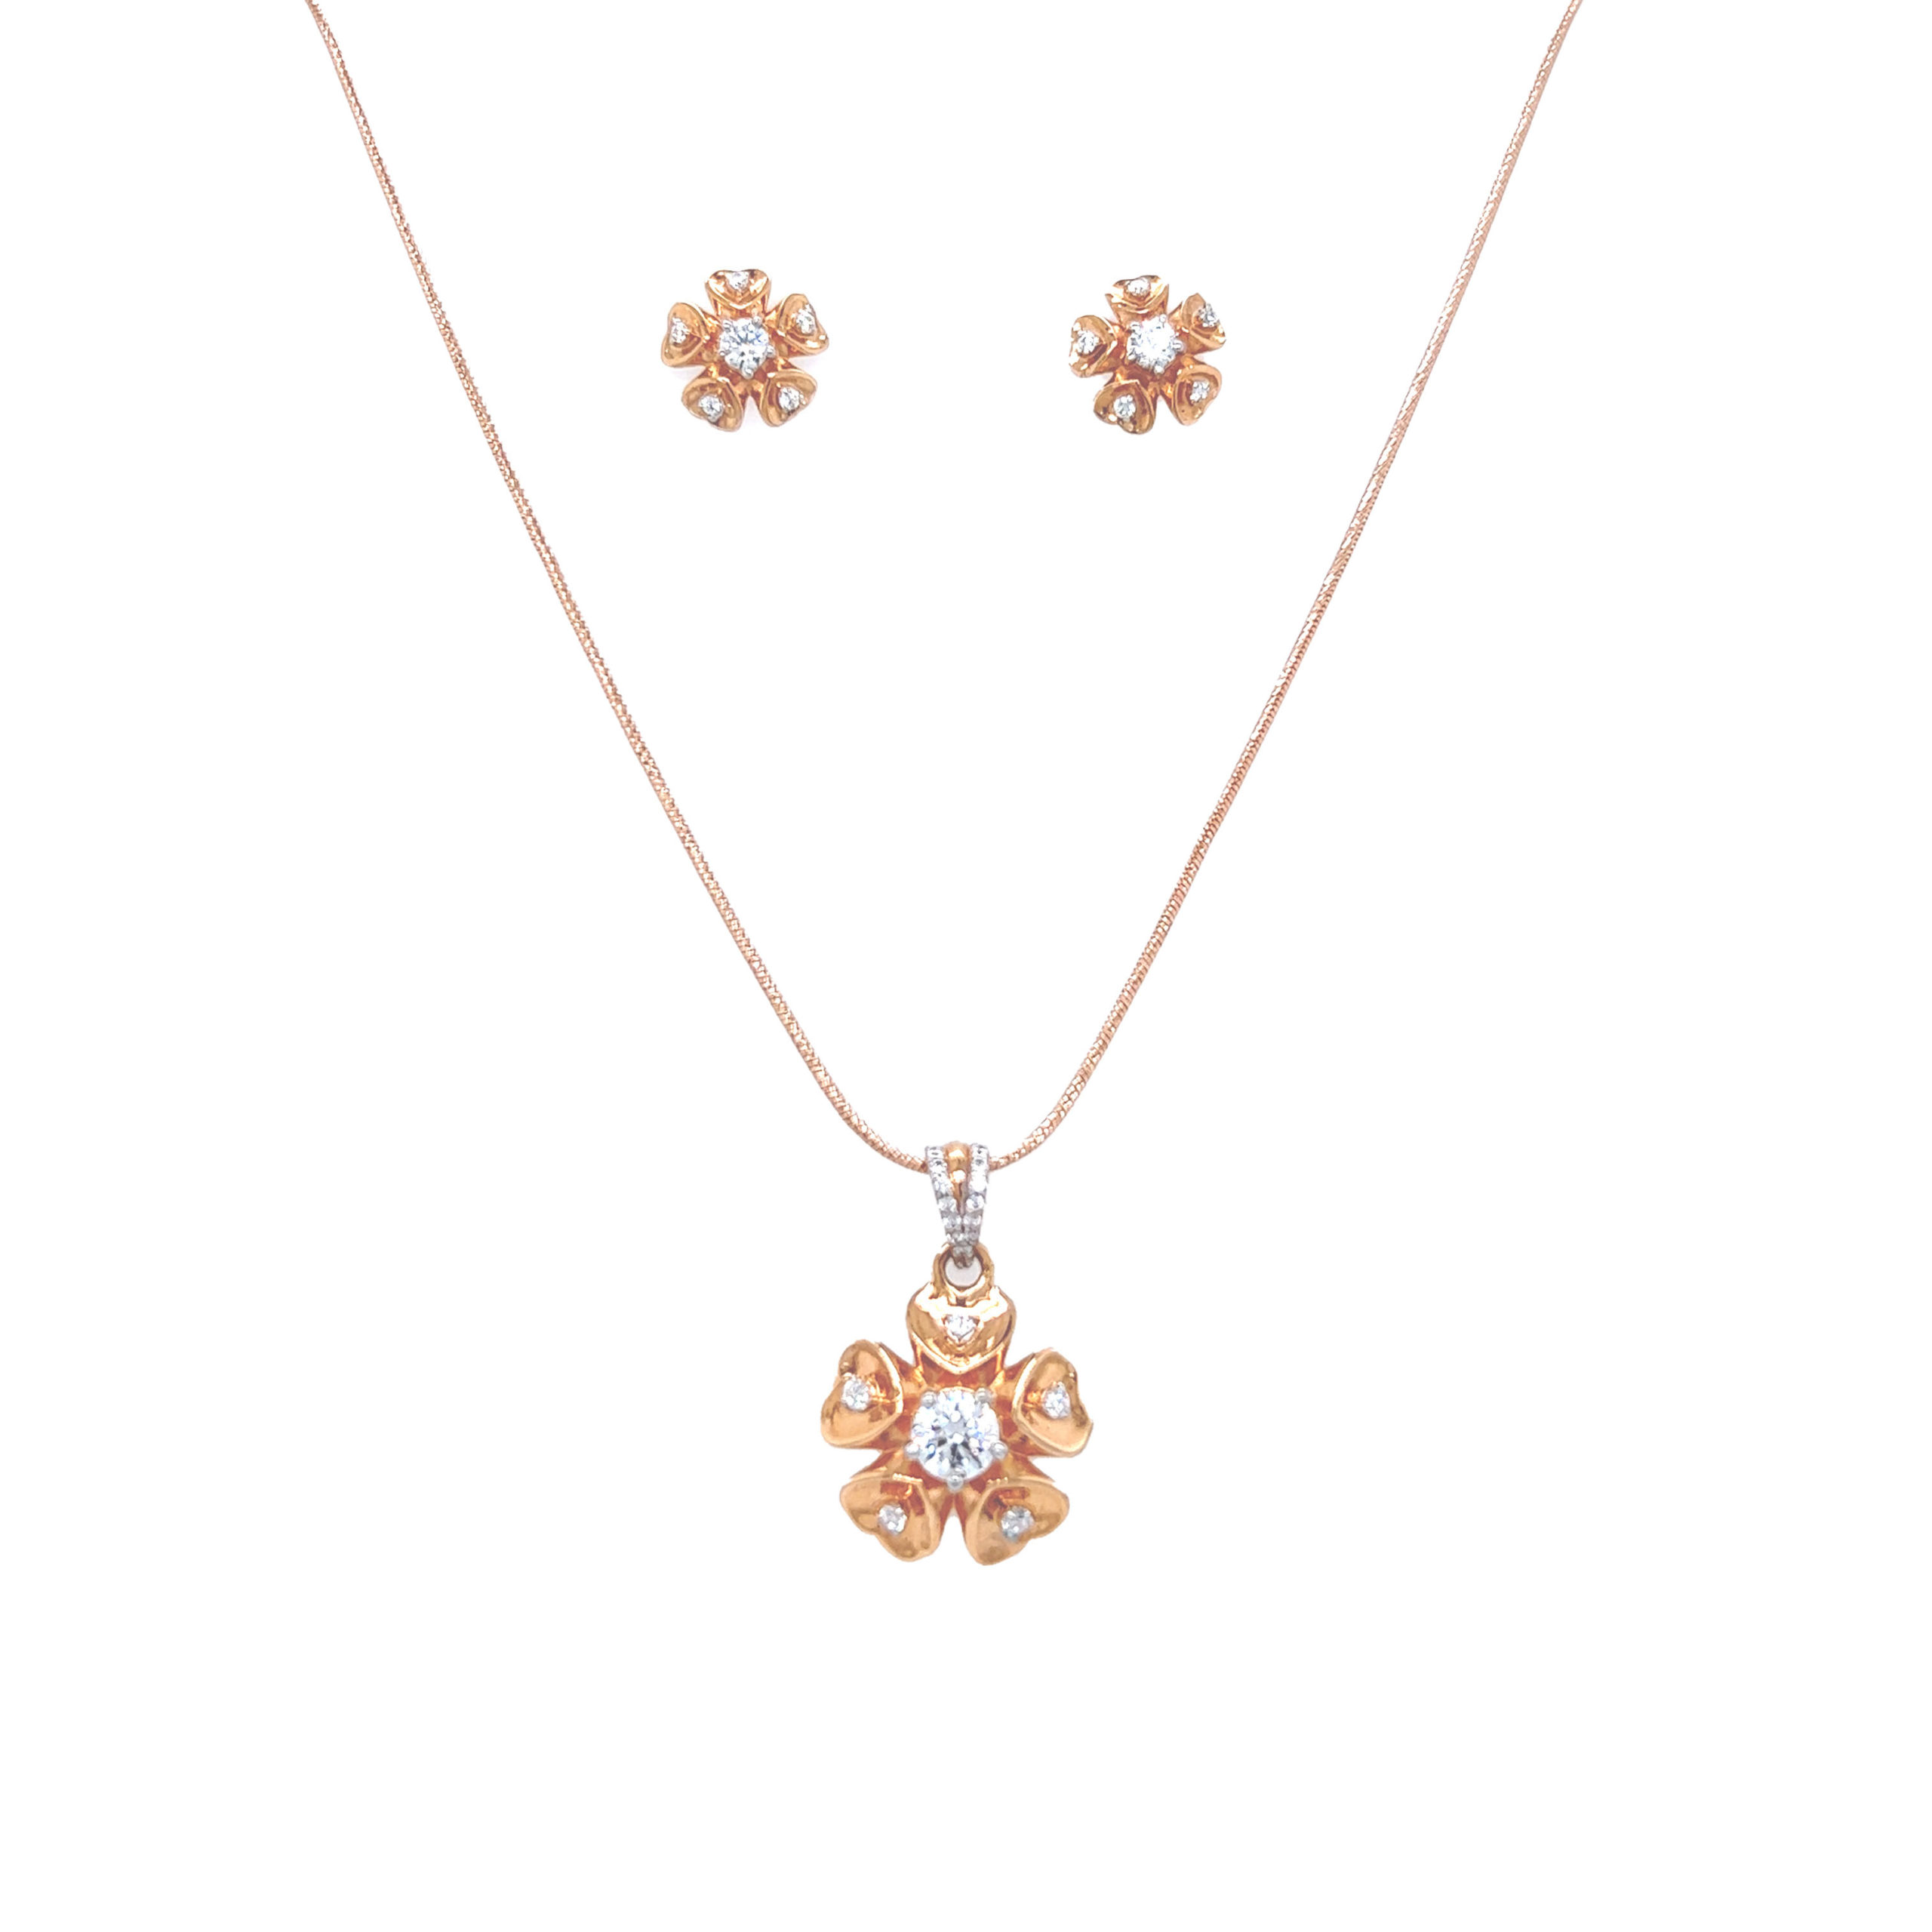 Gold look alike Pendant and Earrings Set - Design 1 – Simpliful Jewelry